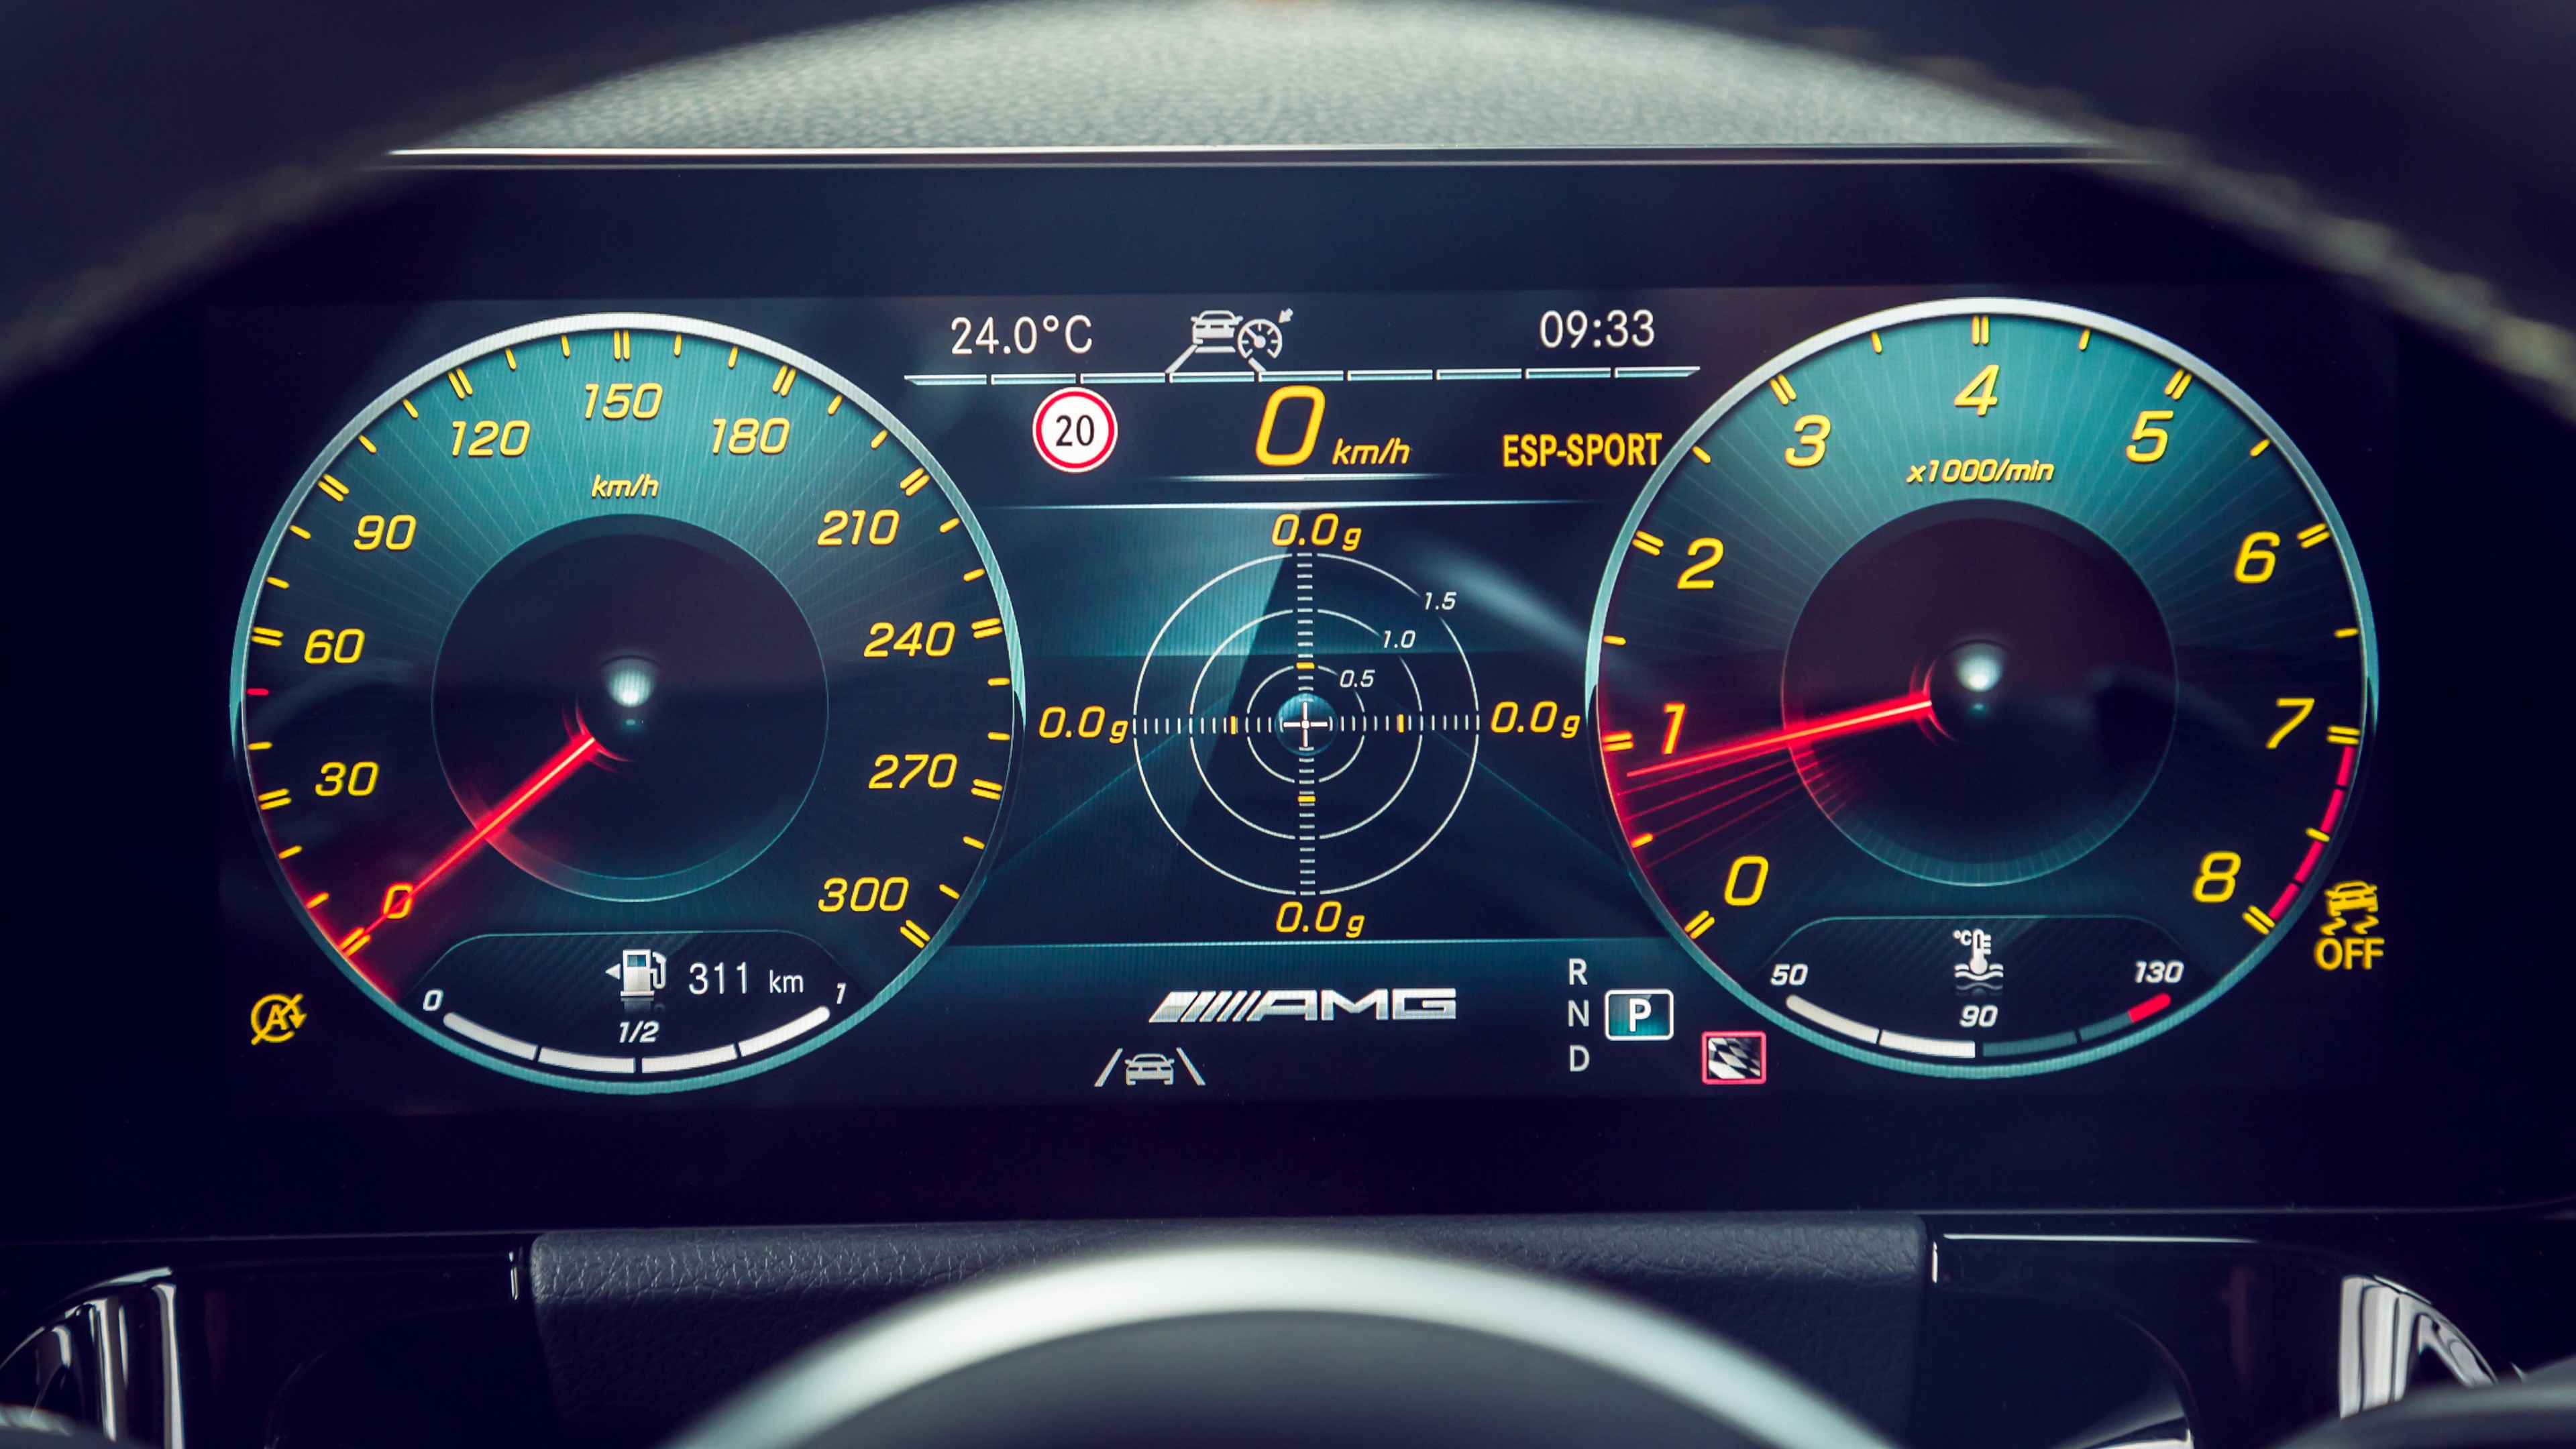 Mercedes AMG GLA 45 S 4MATIC+ Aerodynamic Package 2021 4K Virtual Cockpit Wallpaper. HD Car Wallpaper